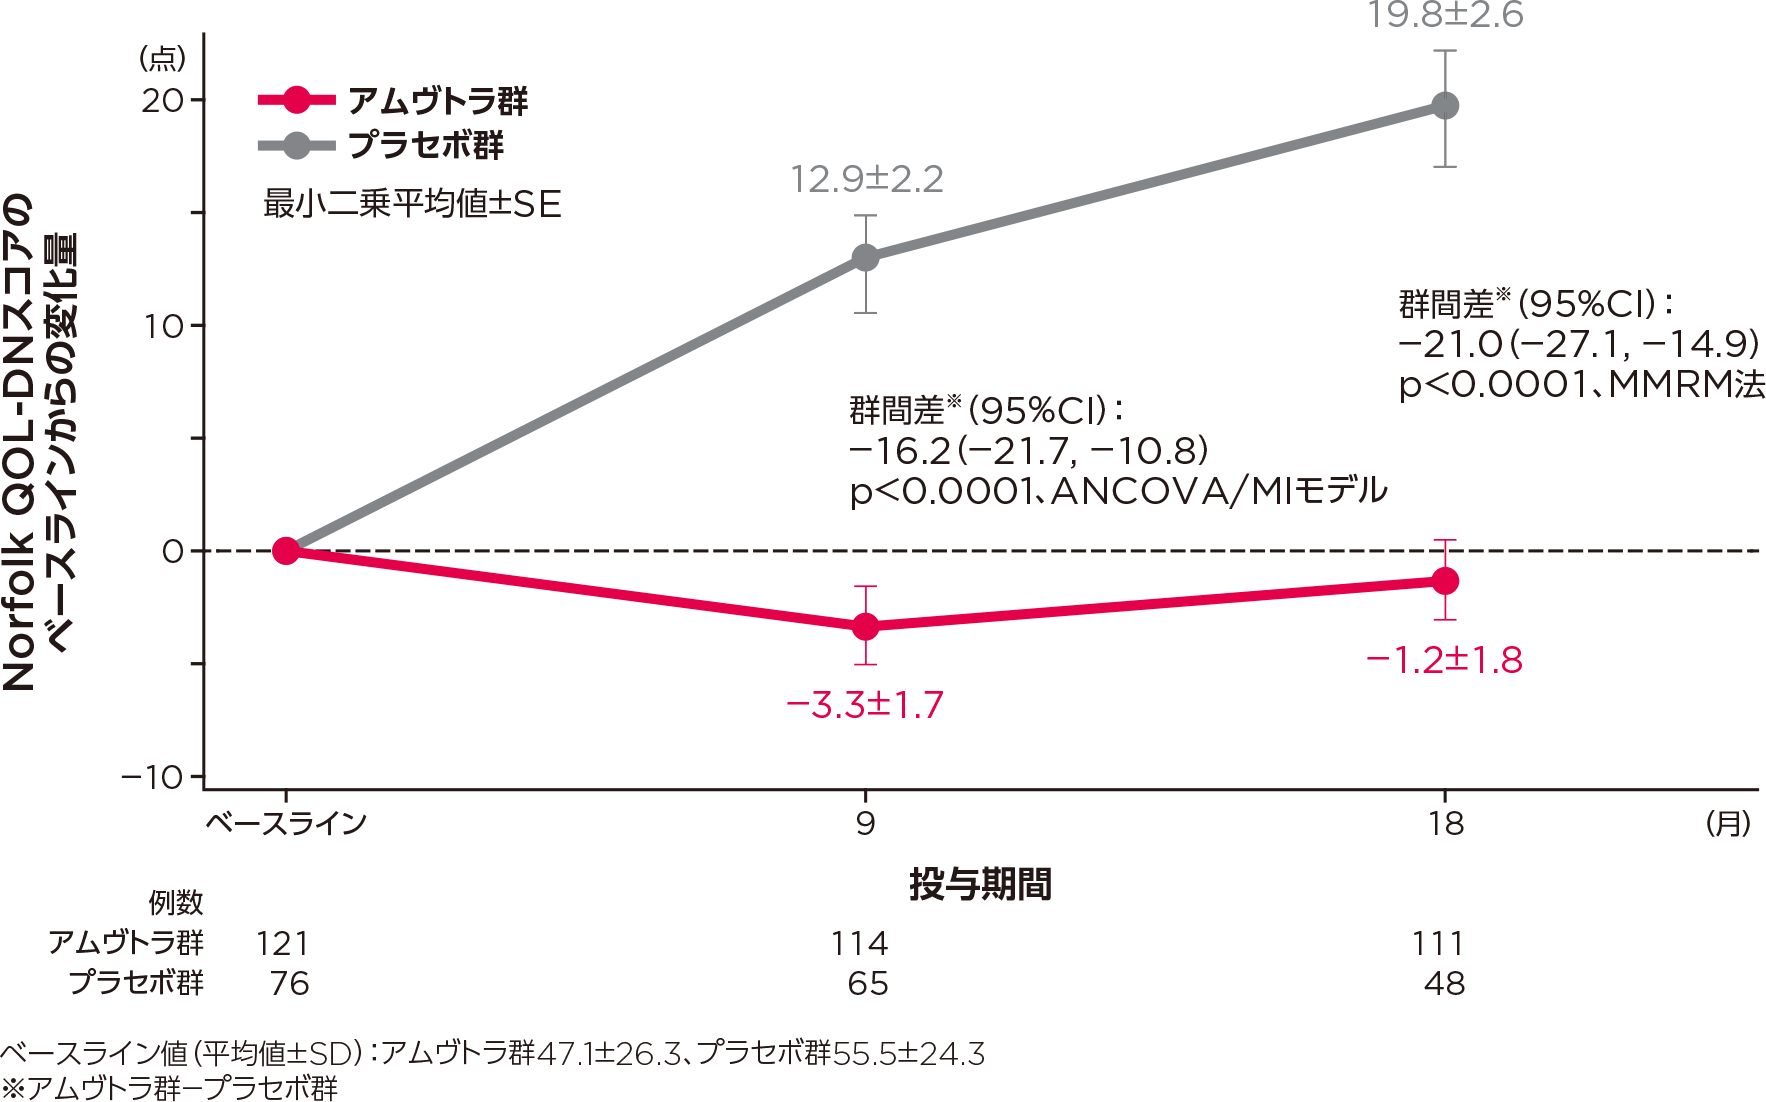 mITT集団におけるNorfolk QOL-DNスコアのベースラインからの変化量の推移のグラフ